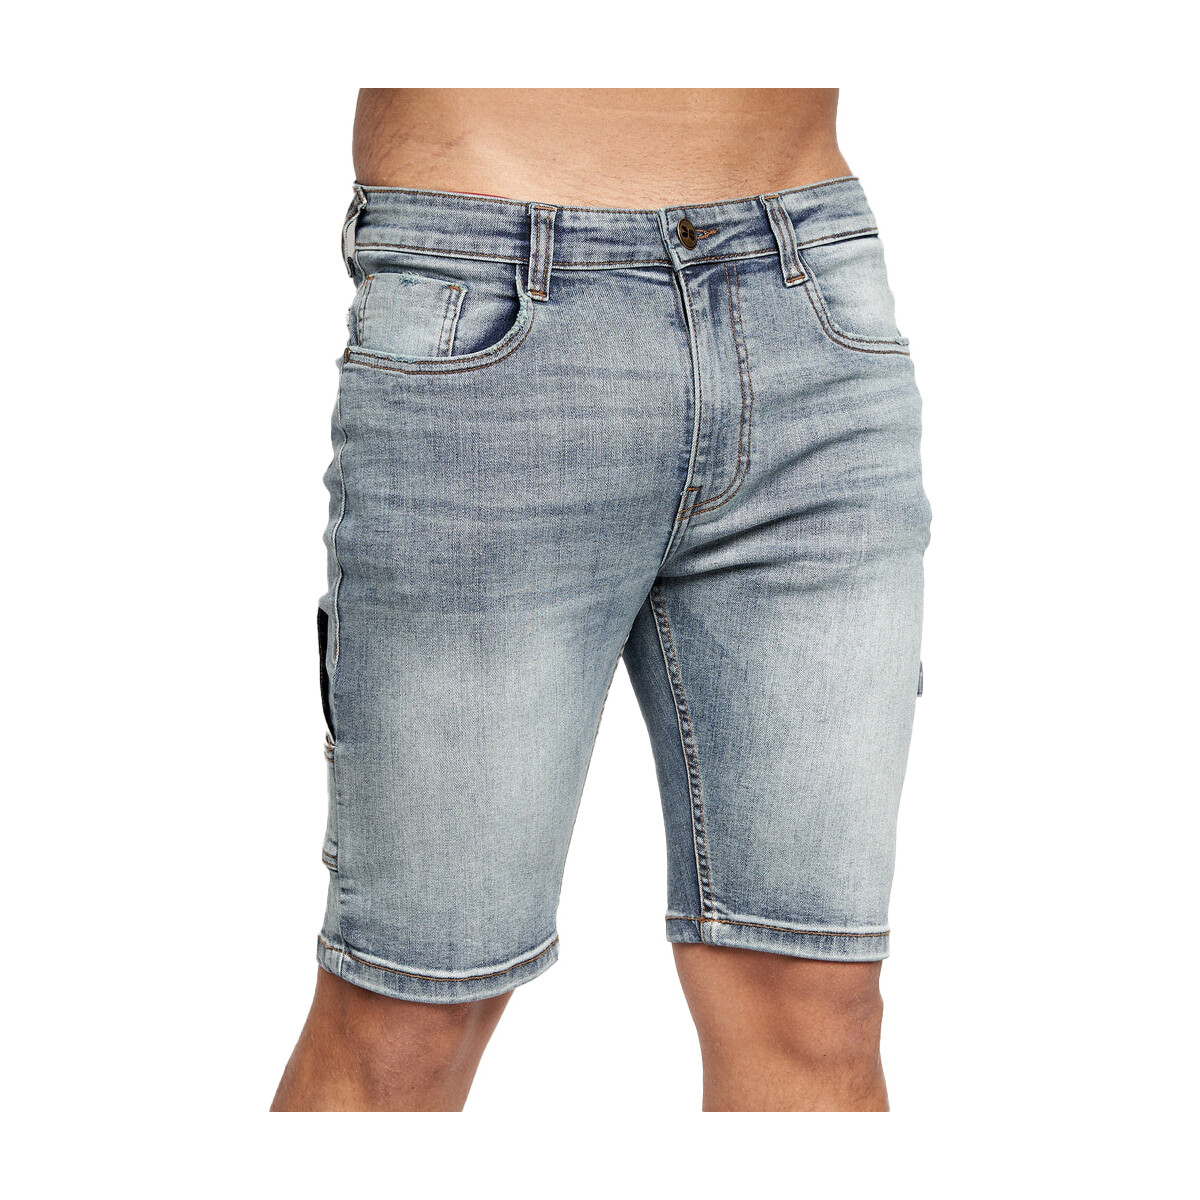 Vêtements Homme Shorts / Bermudas Crosshatch Carpenter Bleu